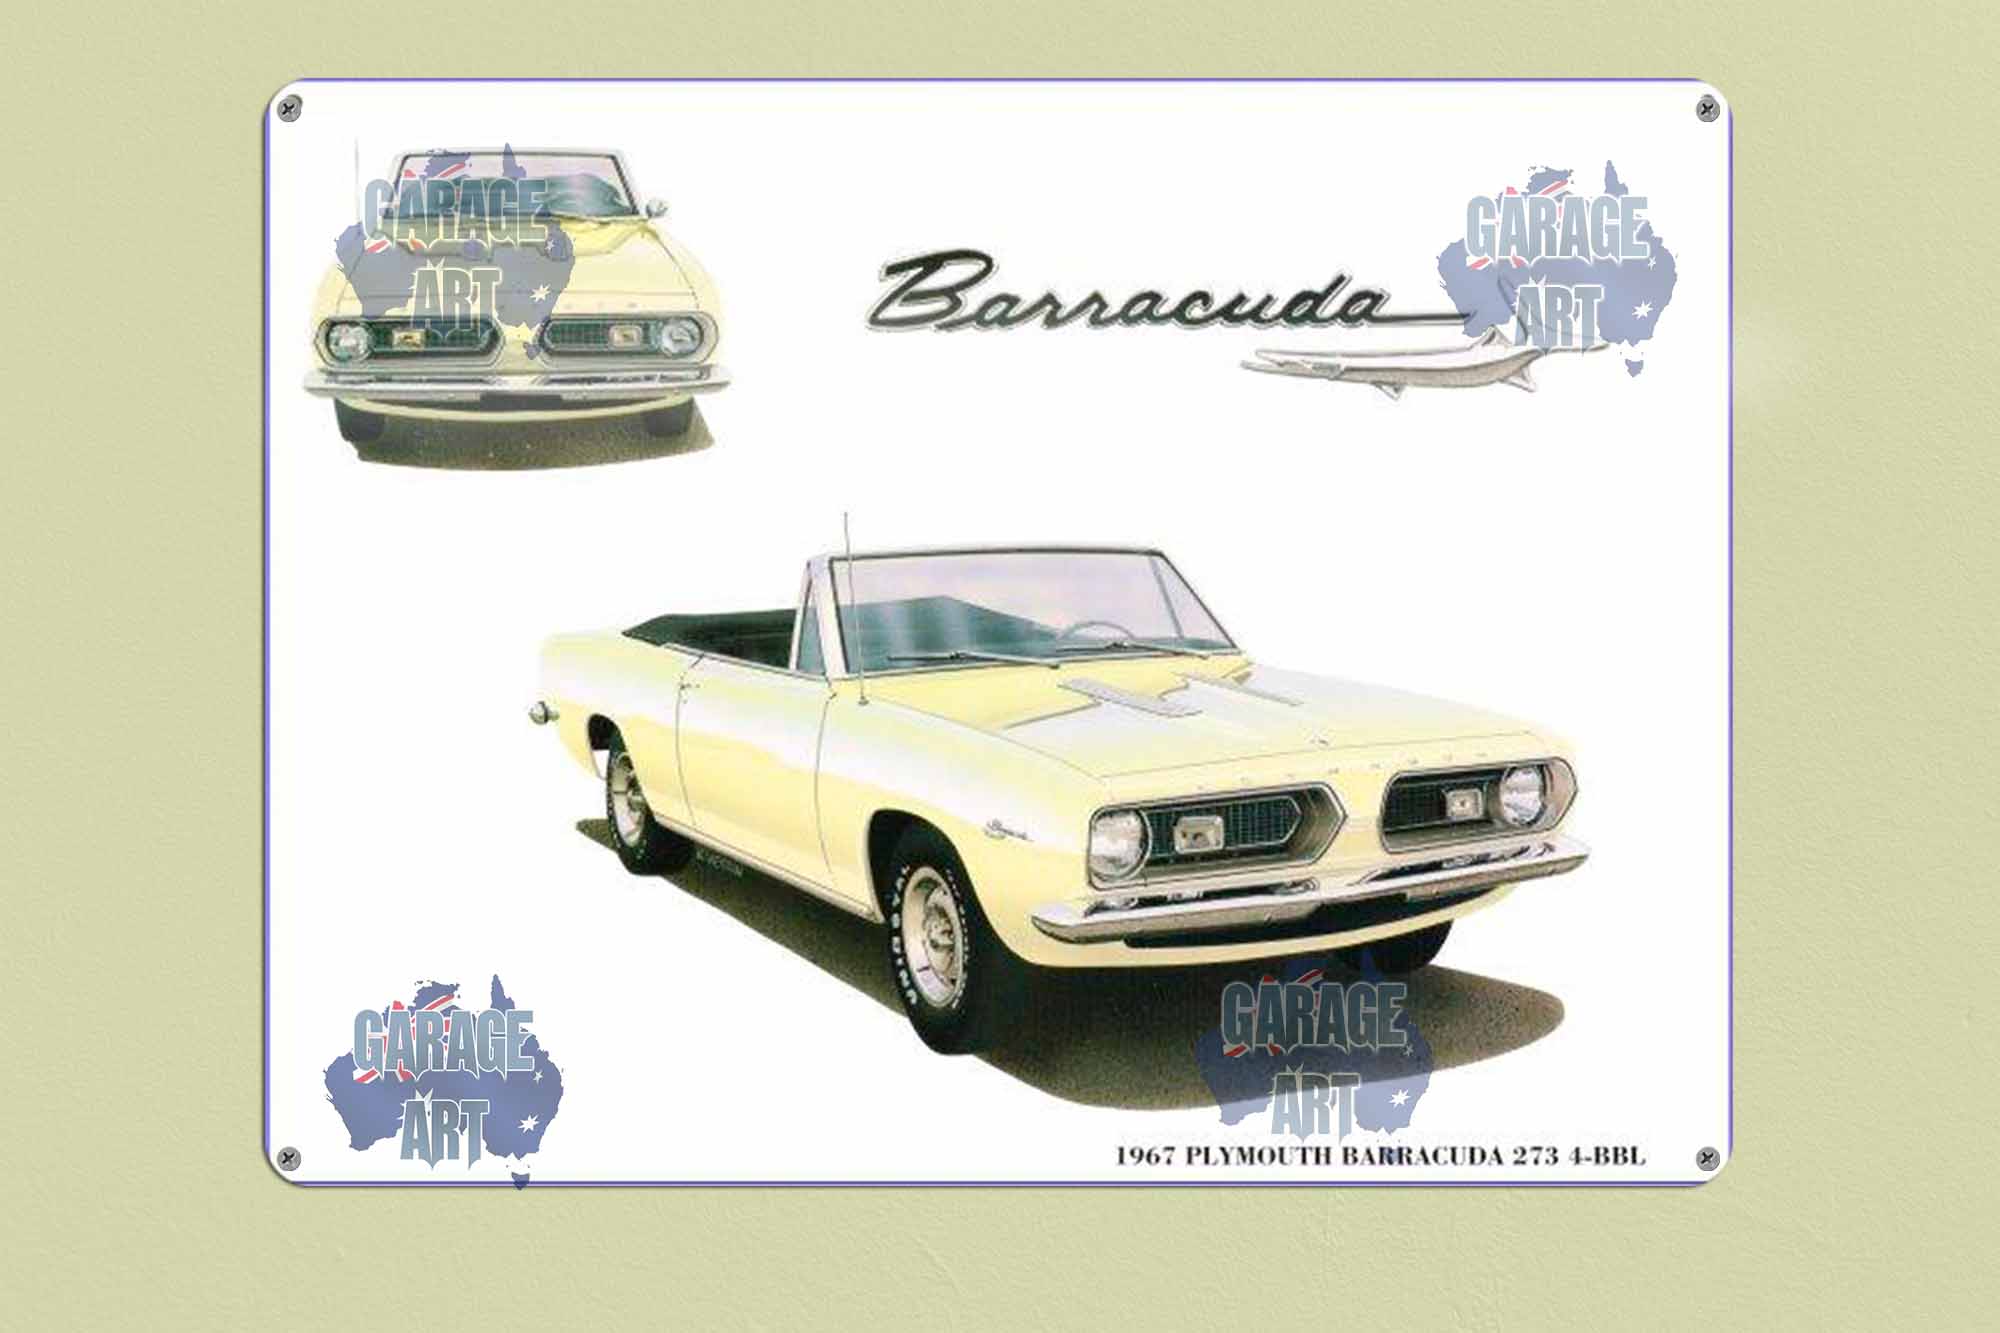 1967 Plymouth Barracuda 273 4bbl Tin Sign freeshipping - garageartaustralia